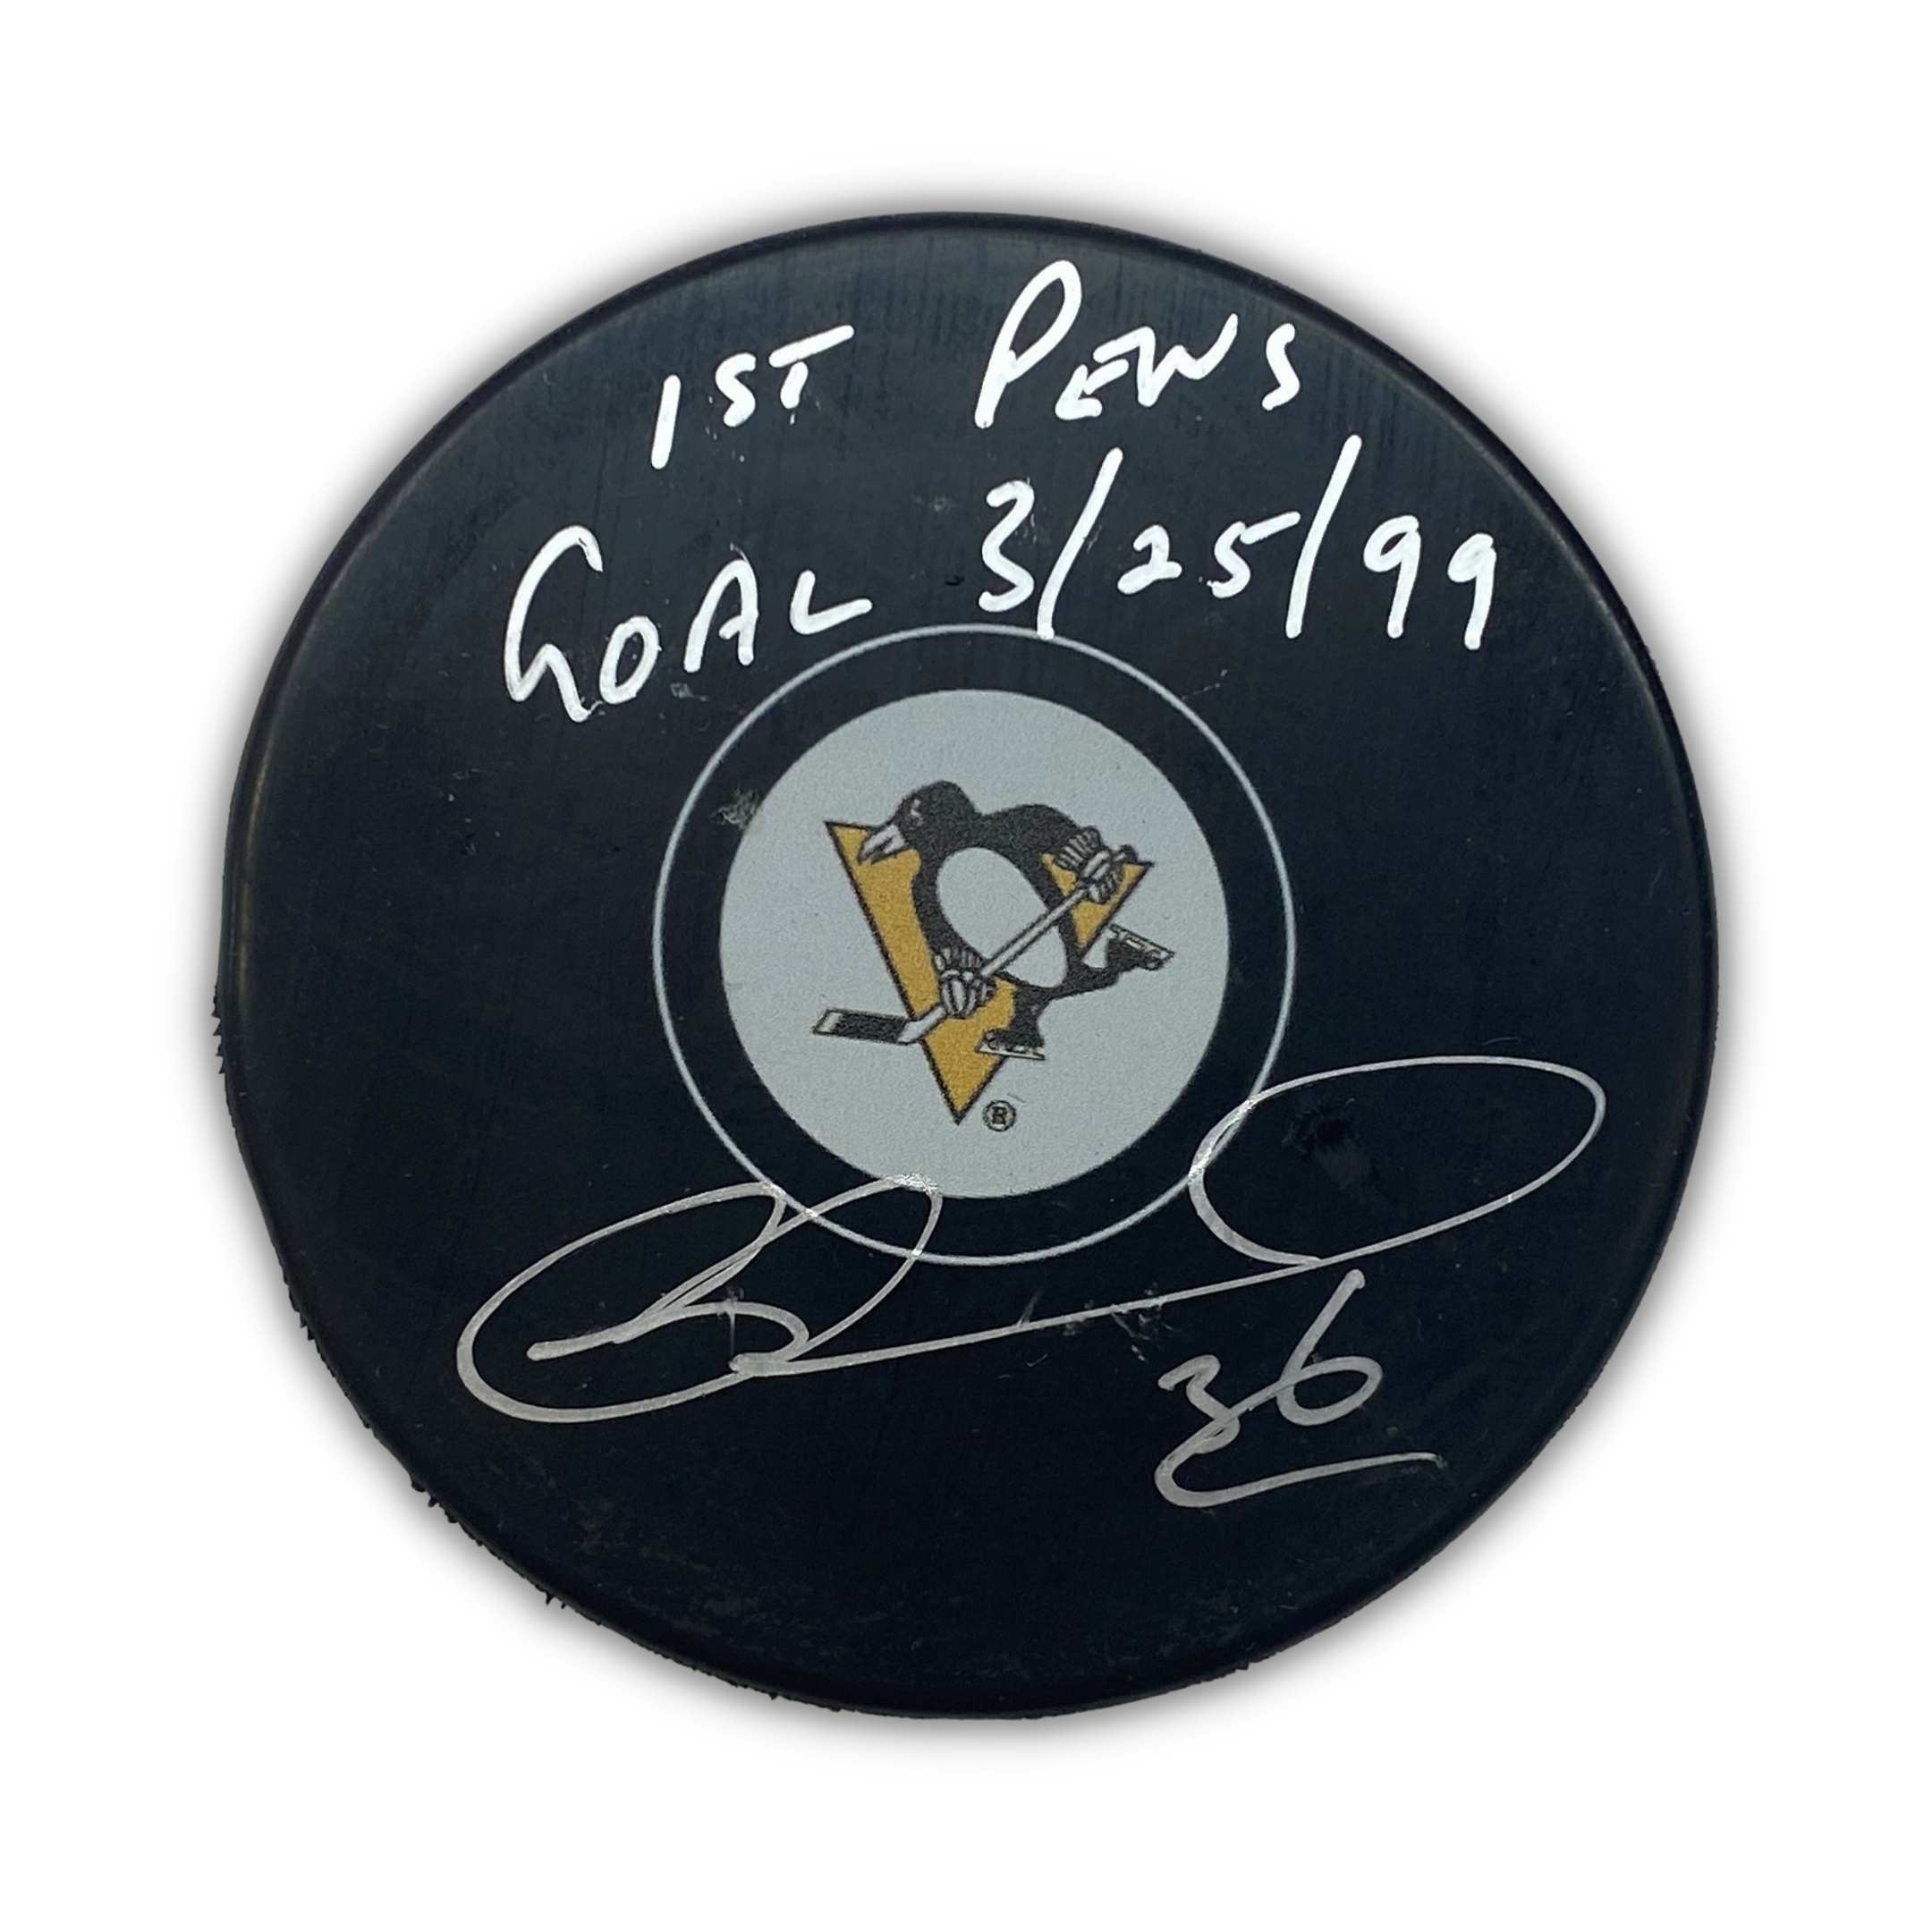 Buy the Pittsburgh Penguins Autographed Matthew Barnaby Hockey